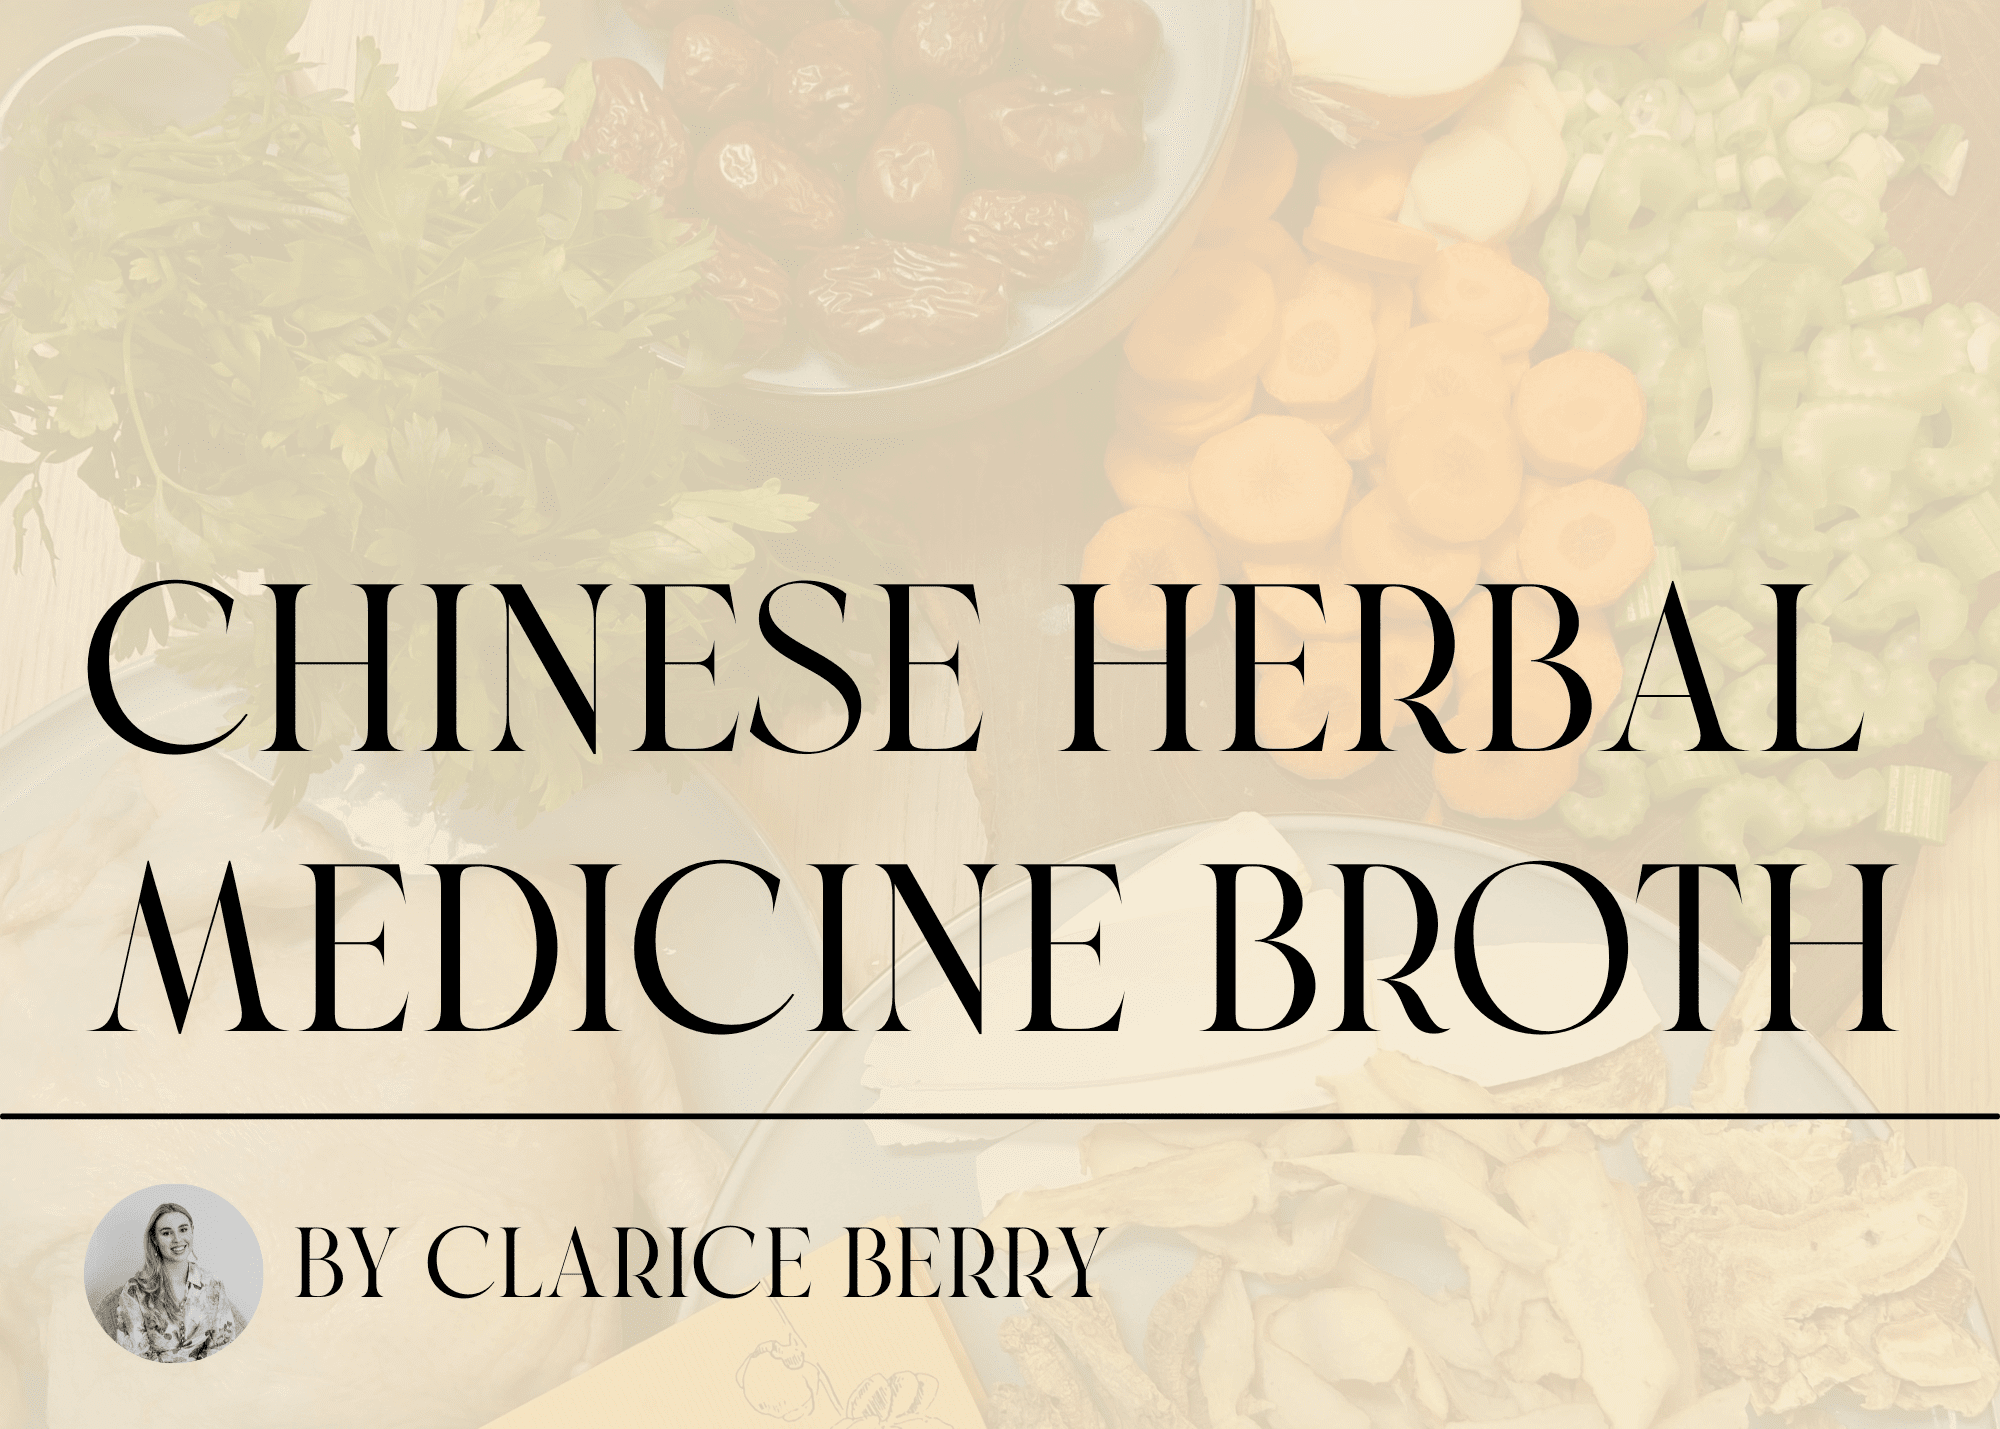 Chinese Herbal Medicine Broth